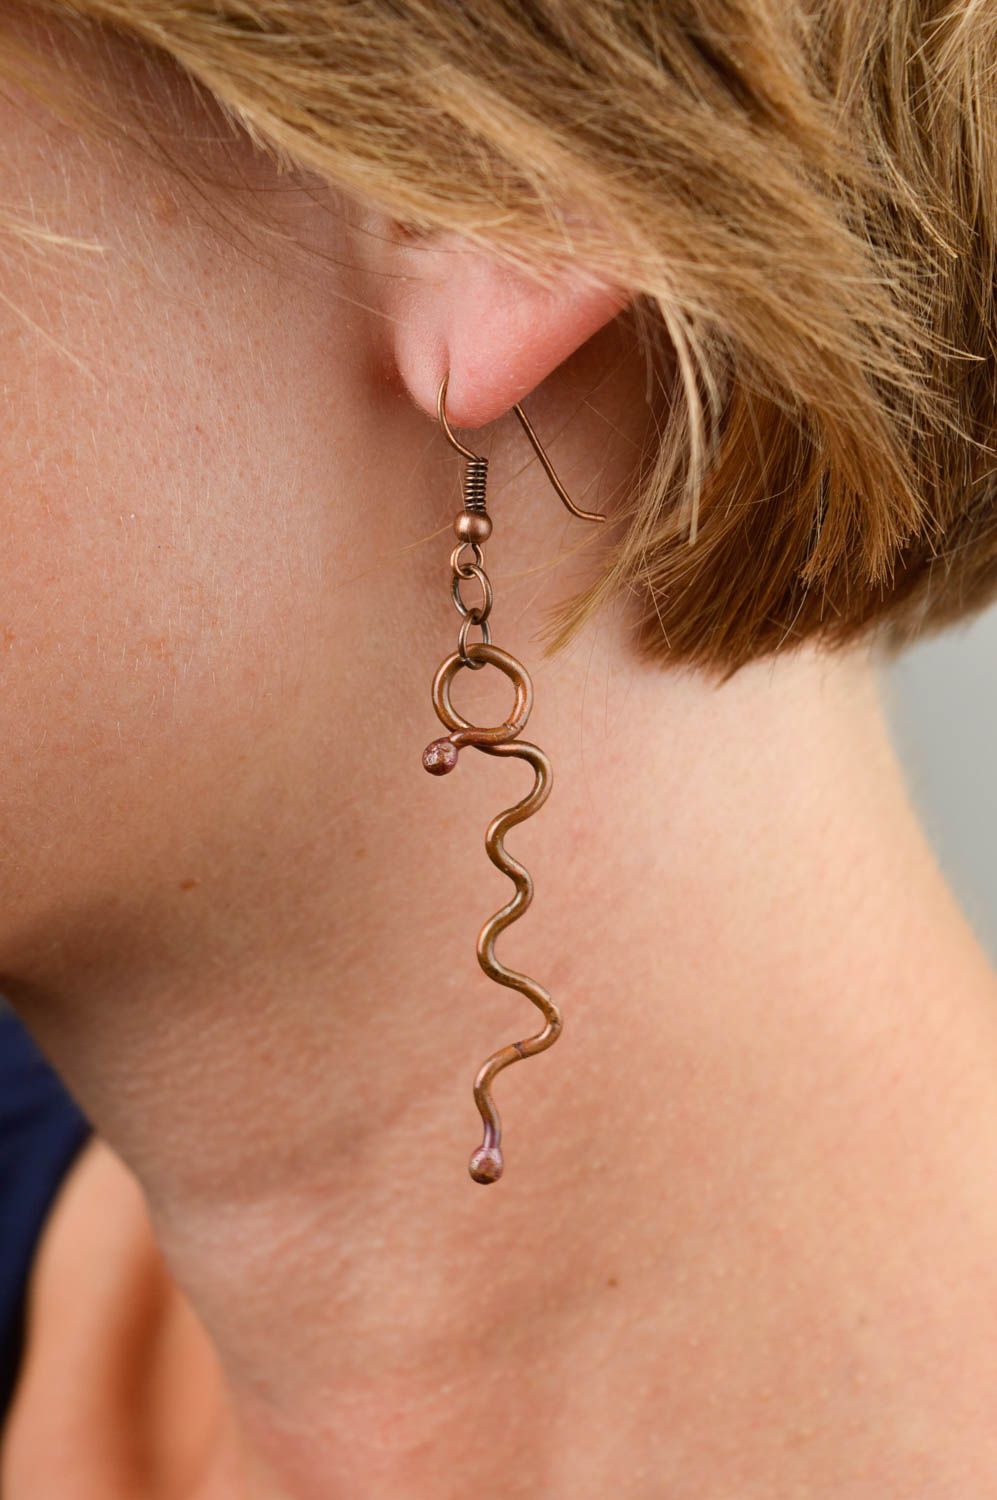 Handmade copper earrings designer long earrings beautiful accessory gift photo 1